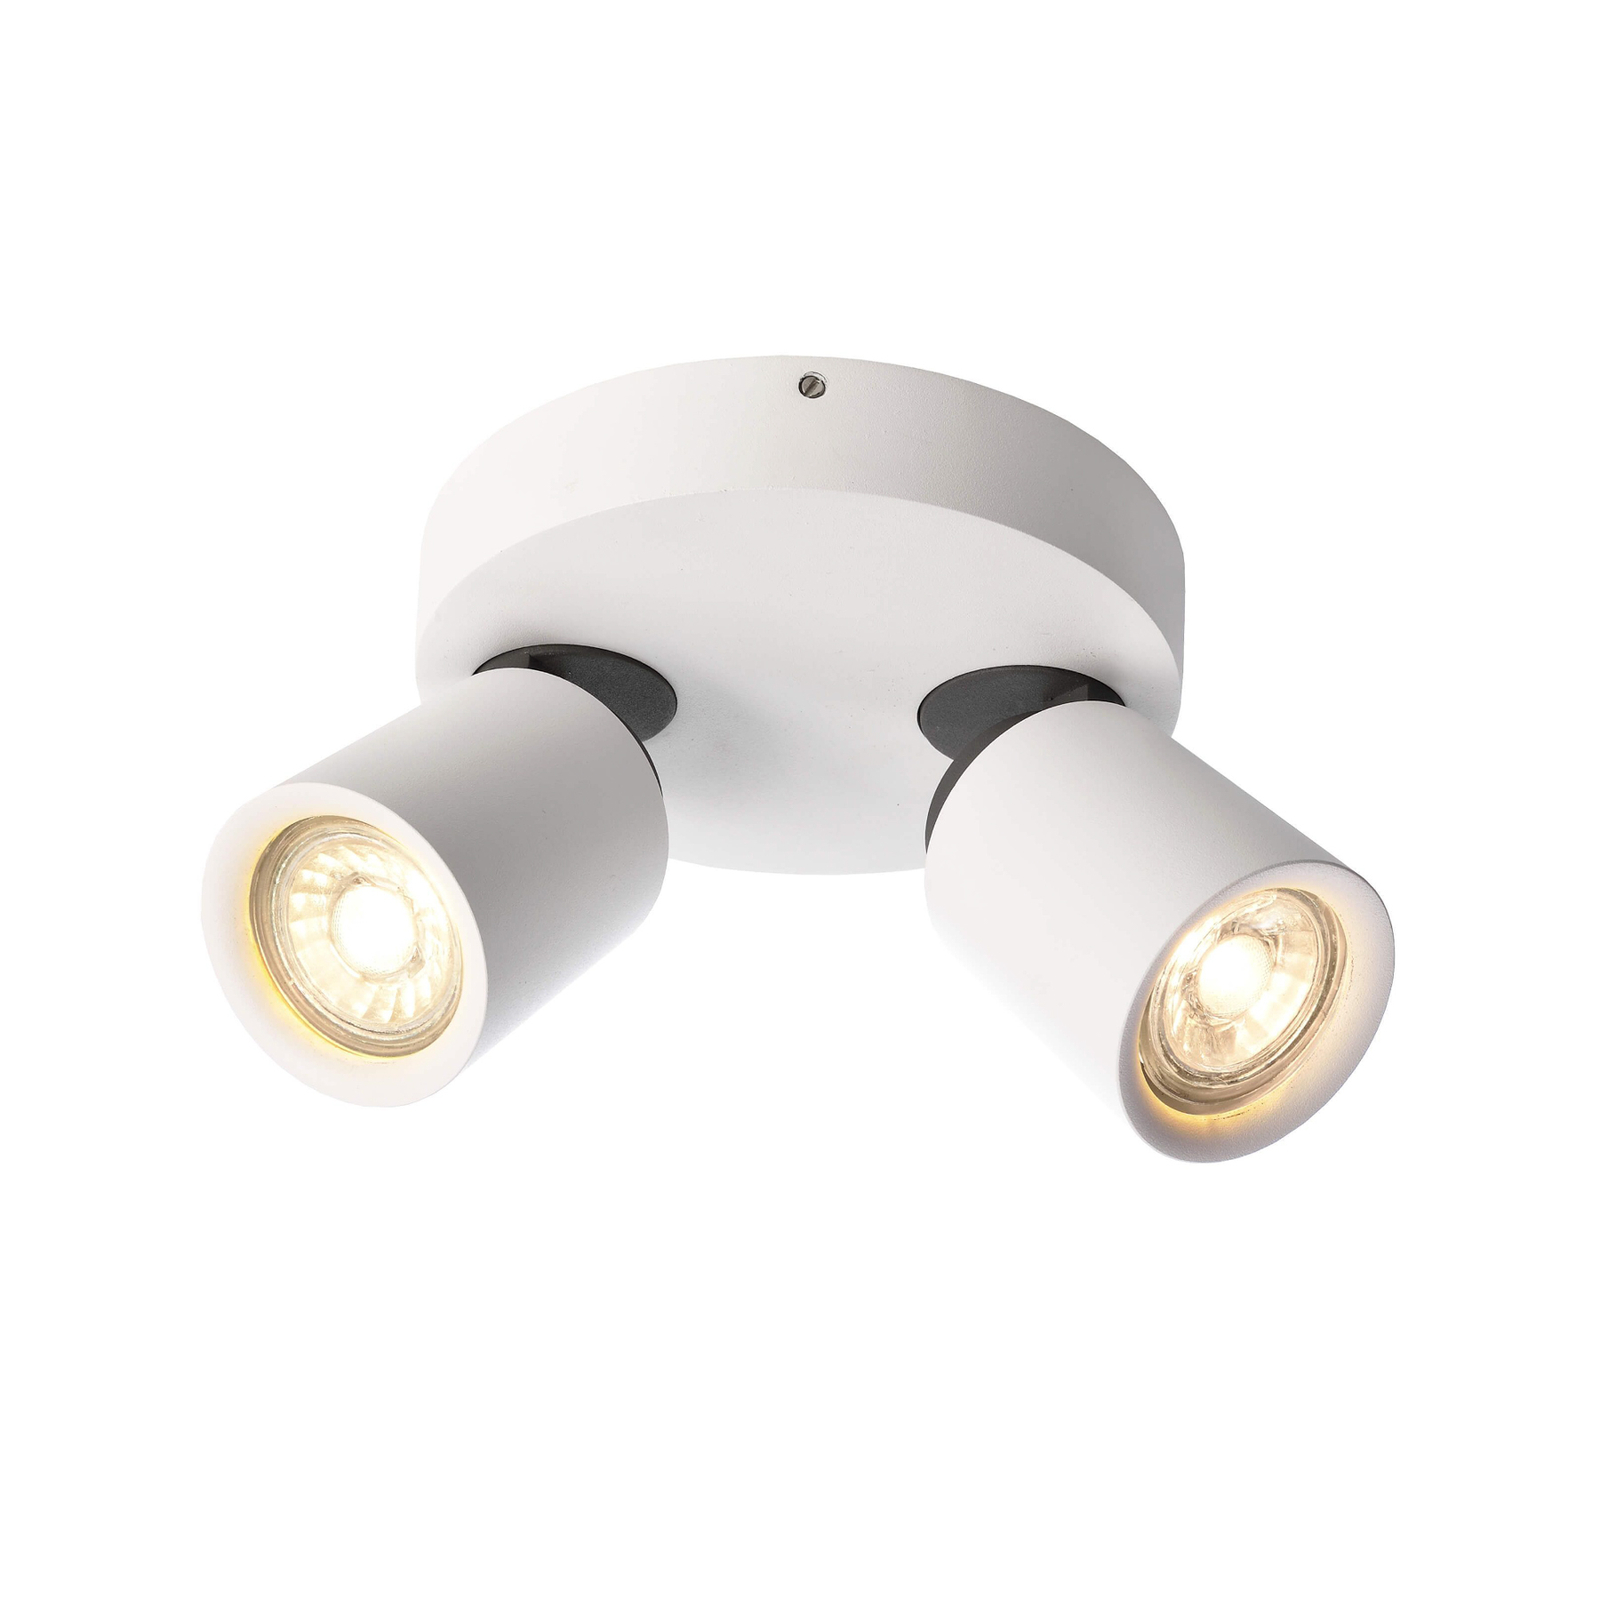 Librae Round II ceiling light, 2-bulb white